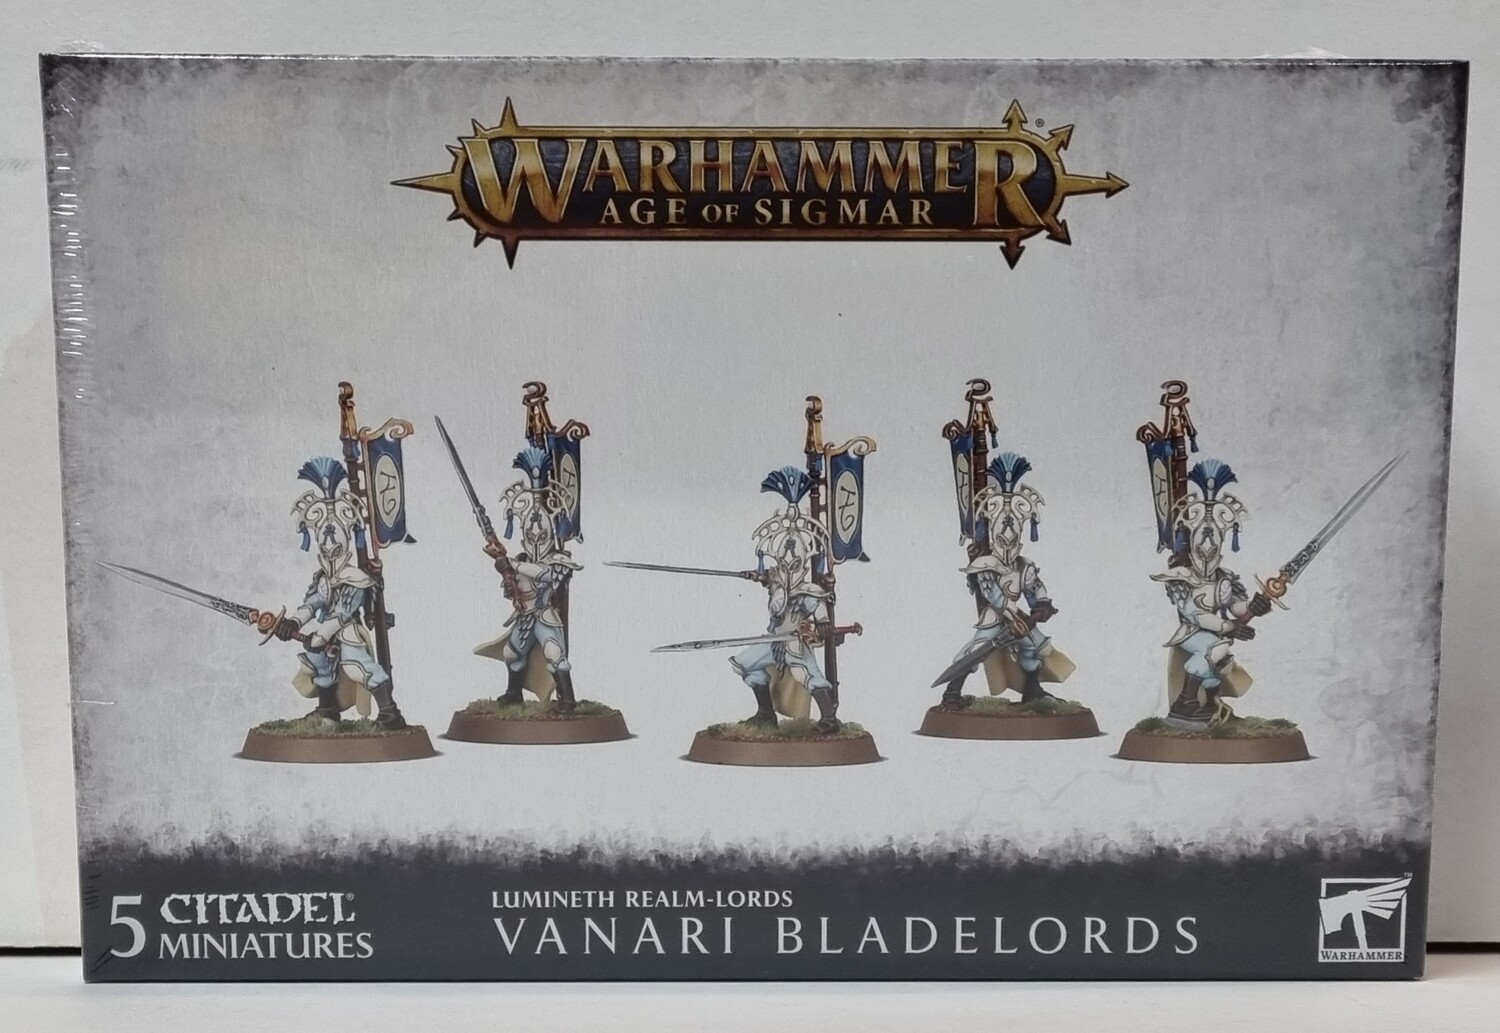 Warhammer, Age of Sigmar, 87-23, Lumineth Realm Lords: Vanari Bladelords